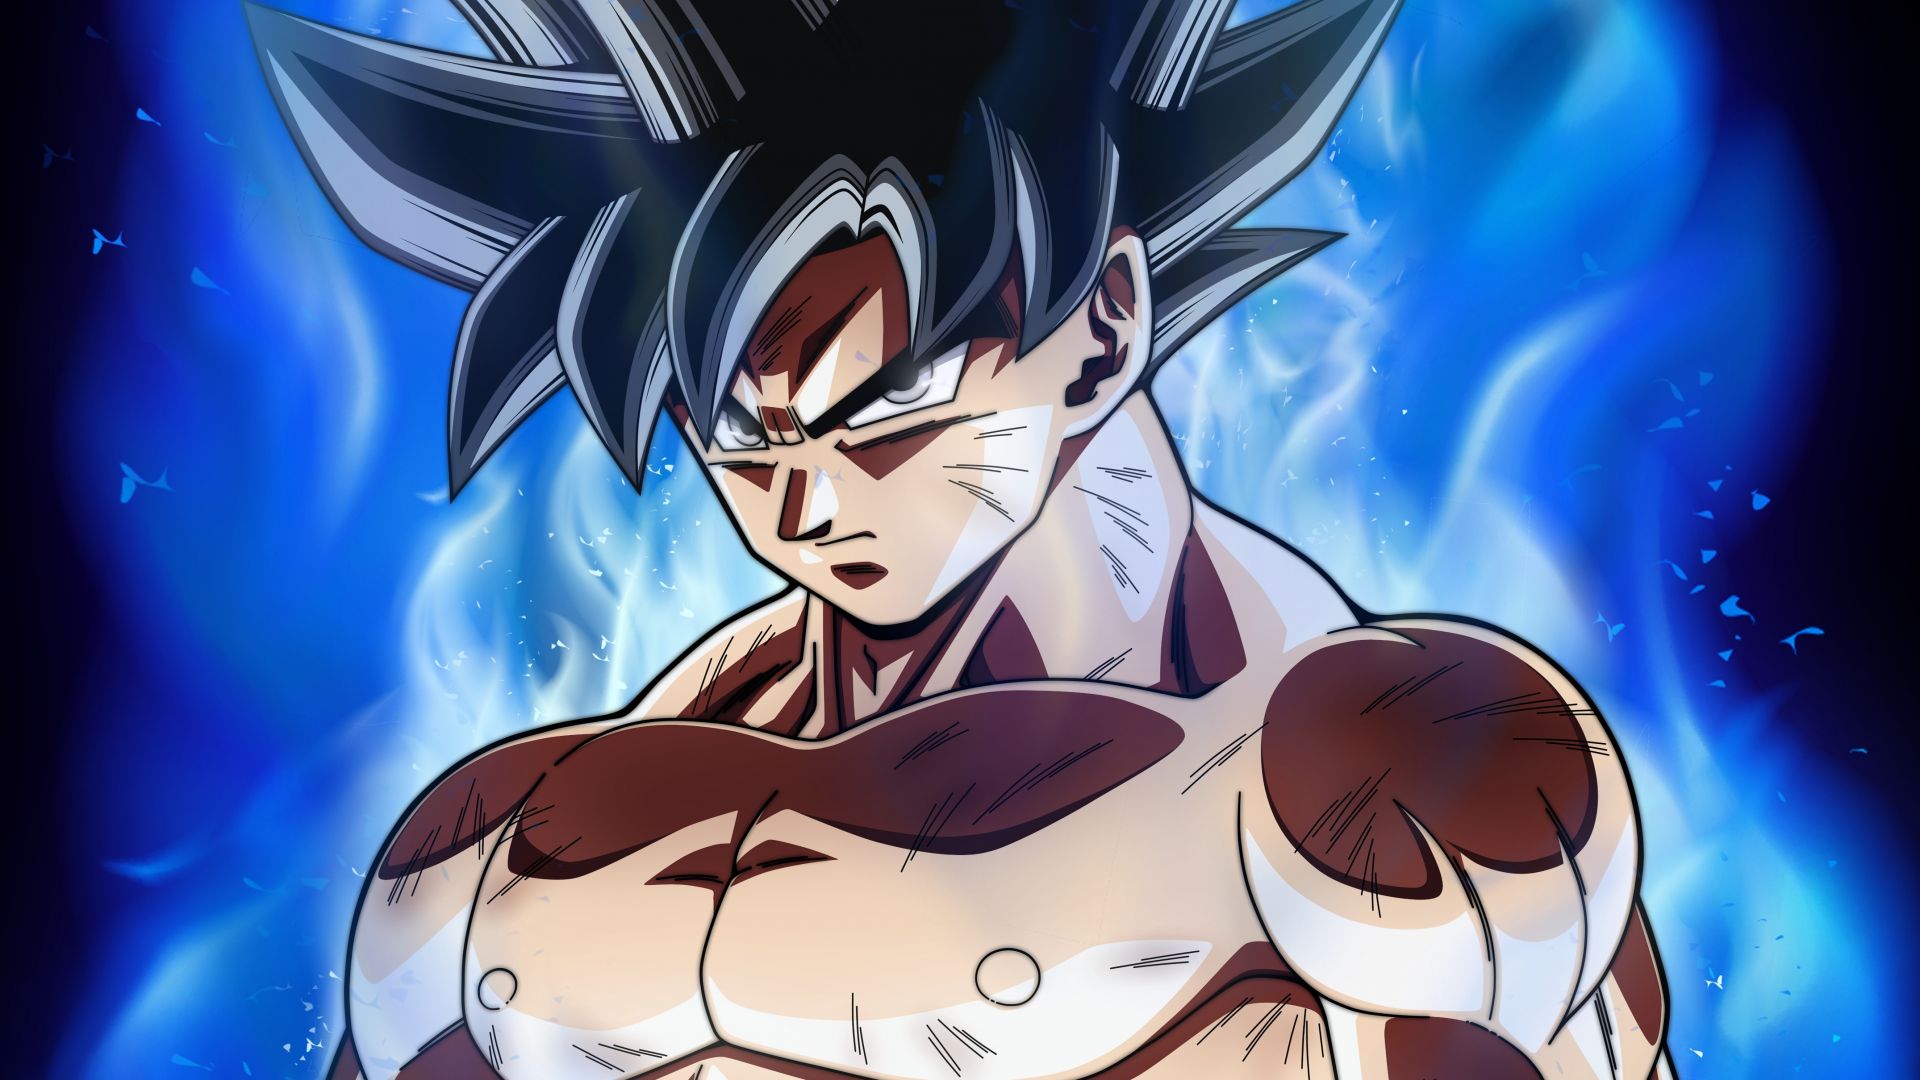 Desktop Wallpaper Goku Dragon Ball Super Anime Hd Image Picture